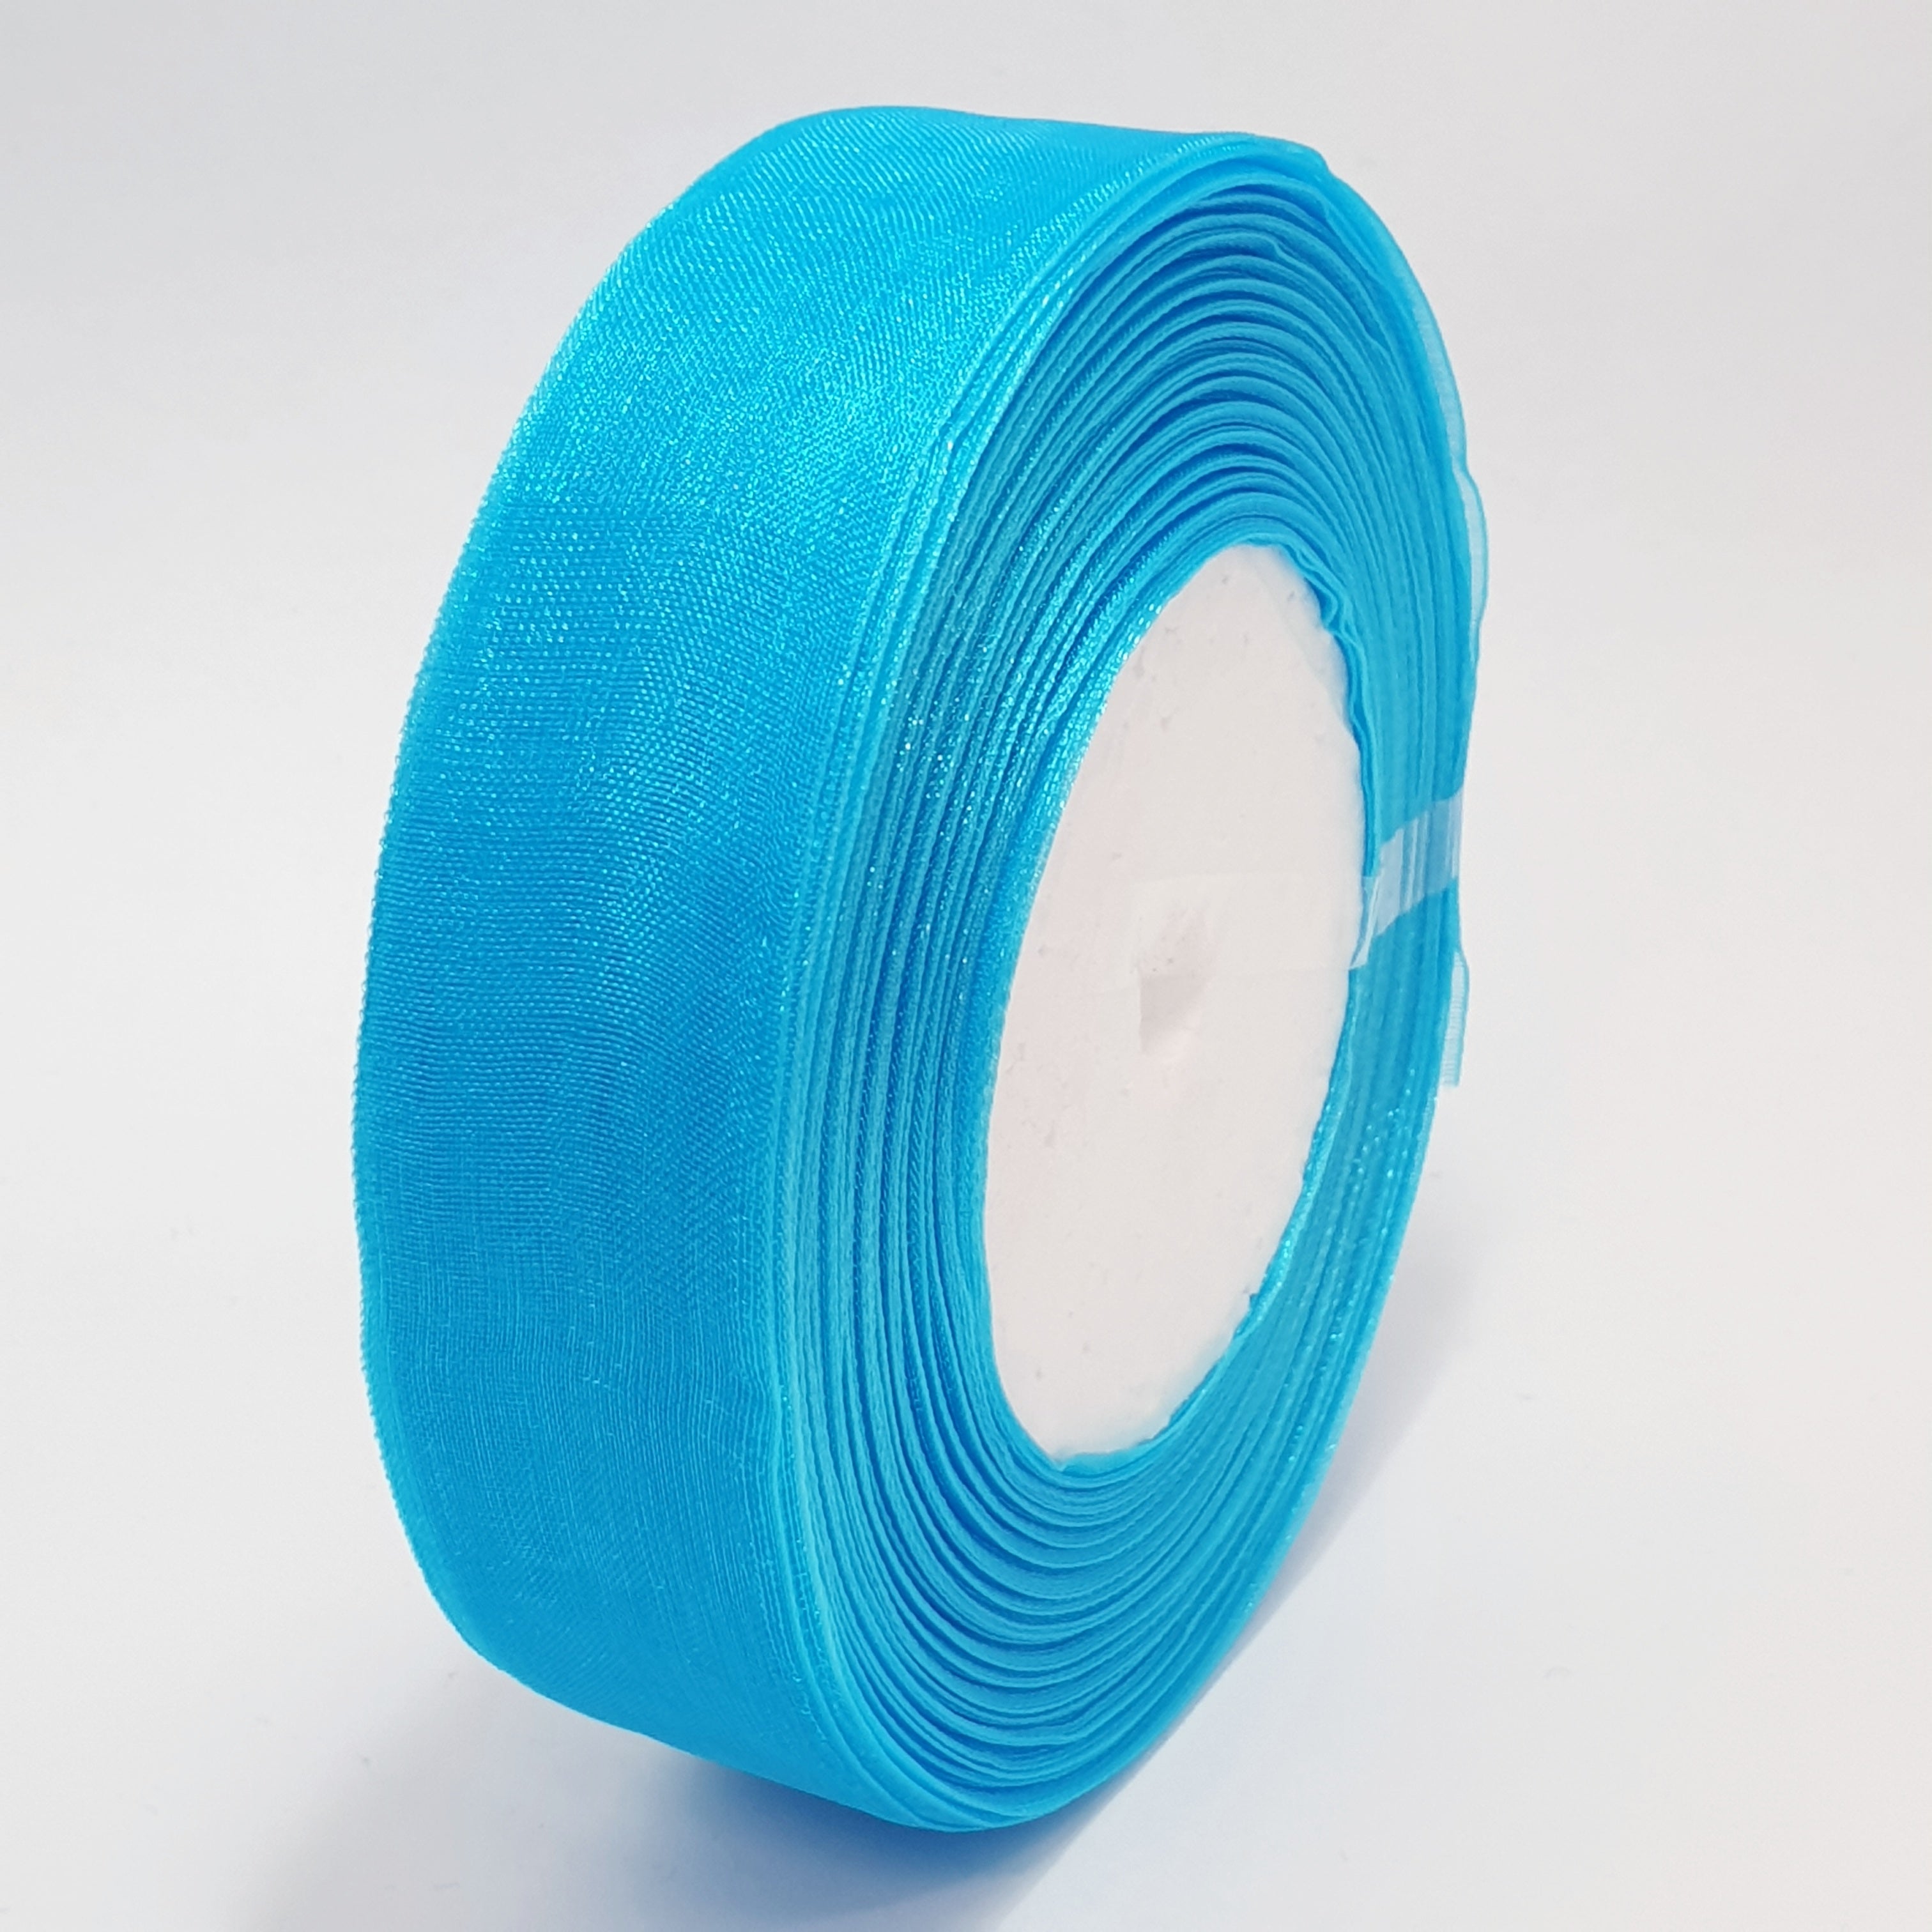 MajorCrafts 25mm 45metres Ocean Blue Sheer Organza Fabric Ribbon Roll BK15